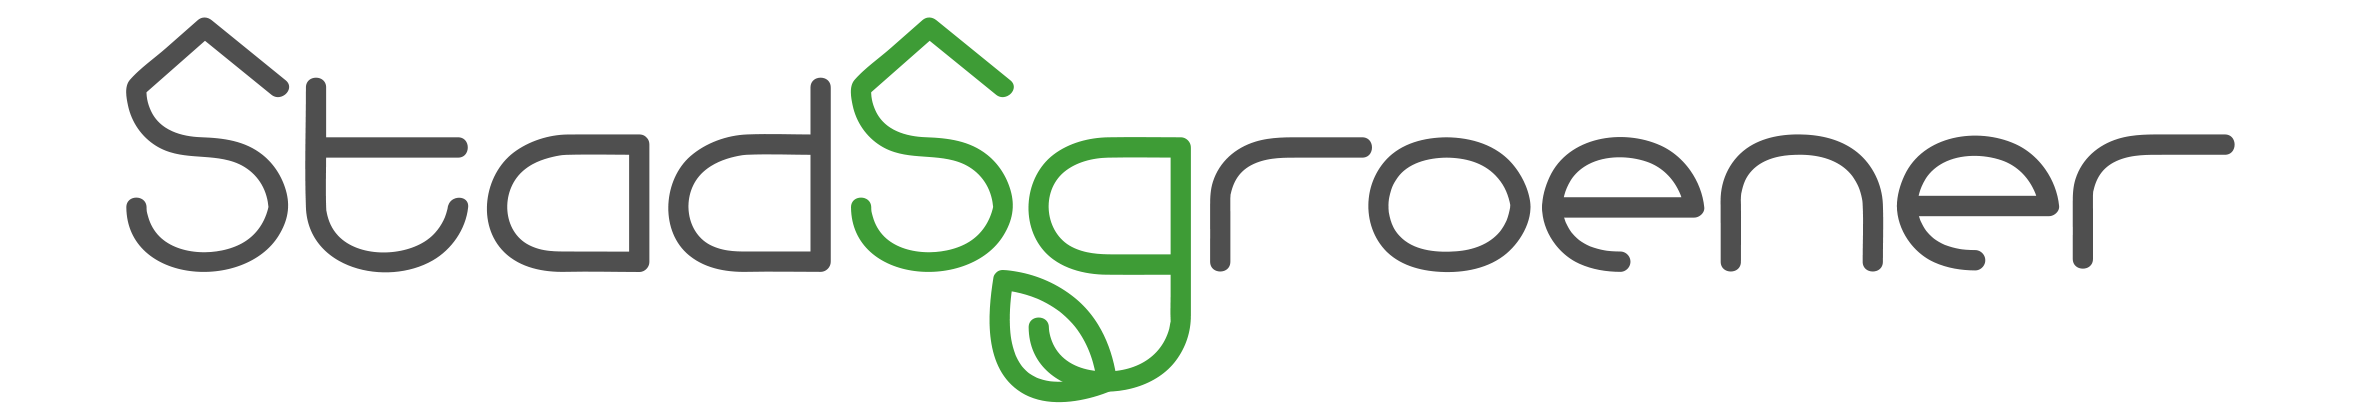 StadsGroener logo